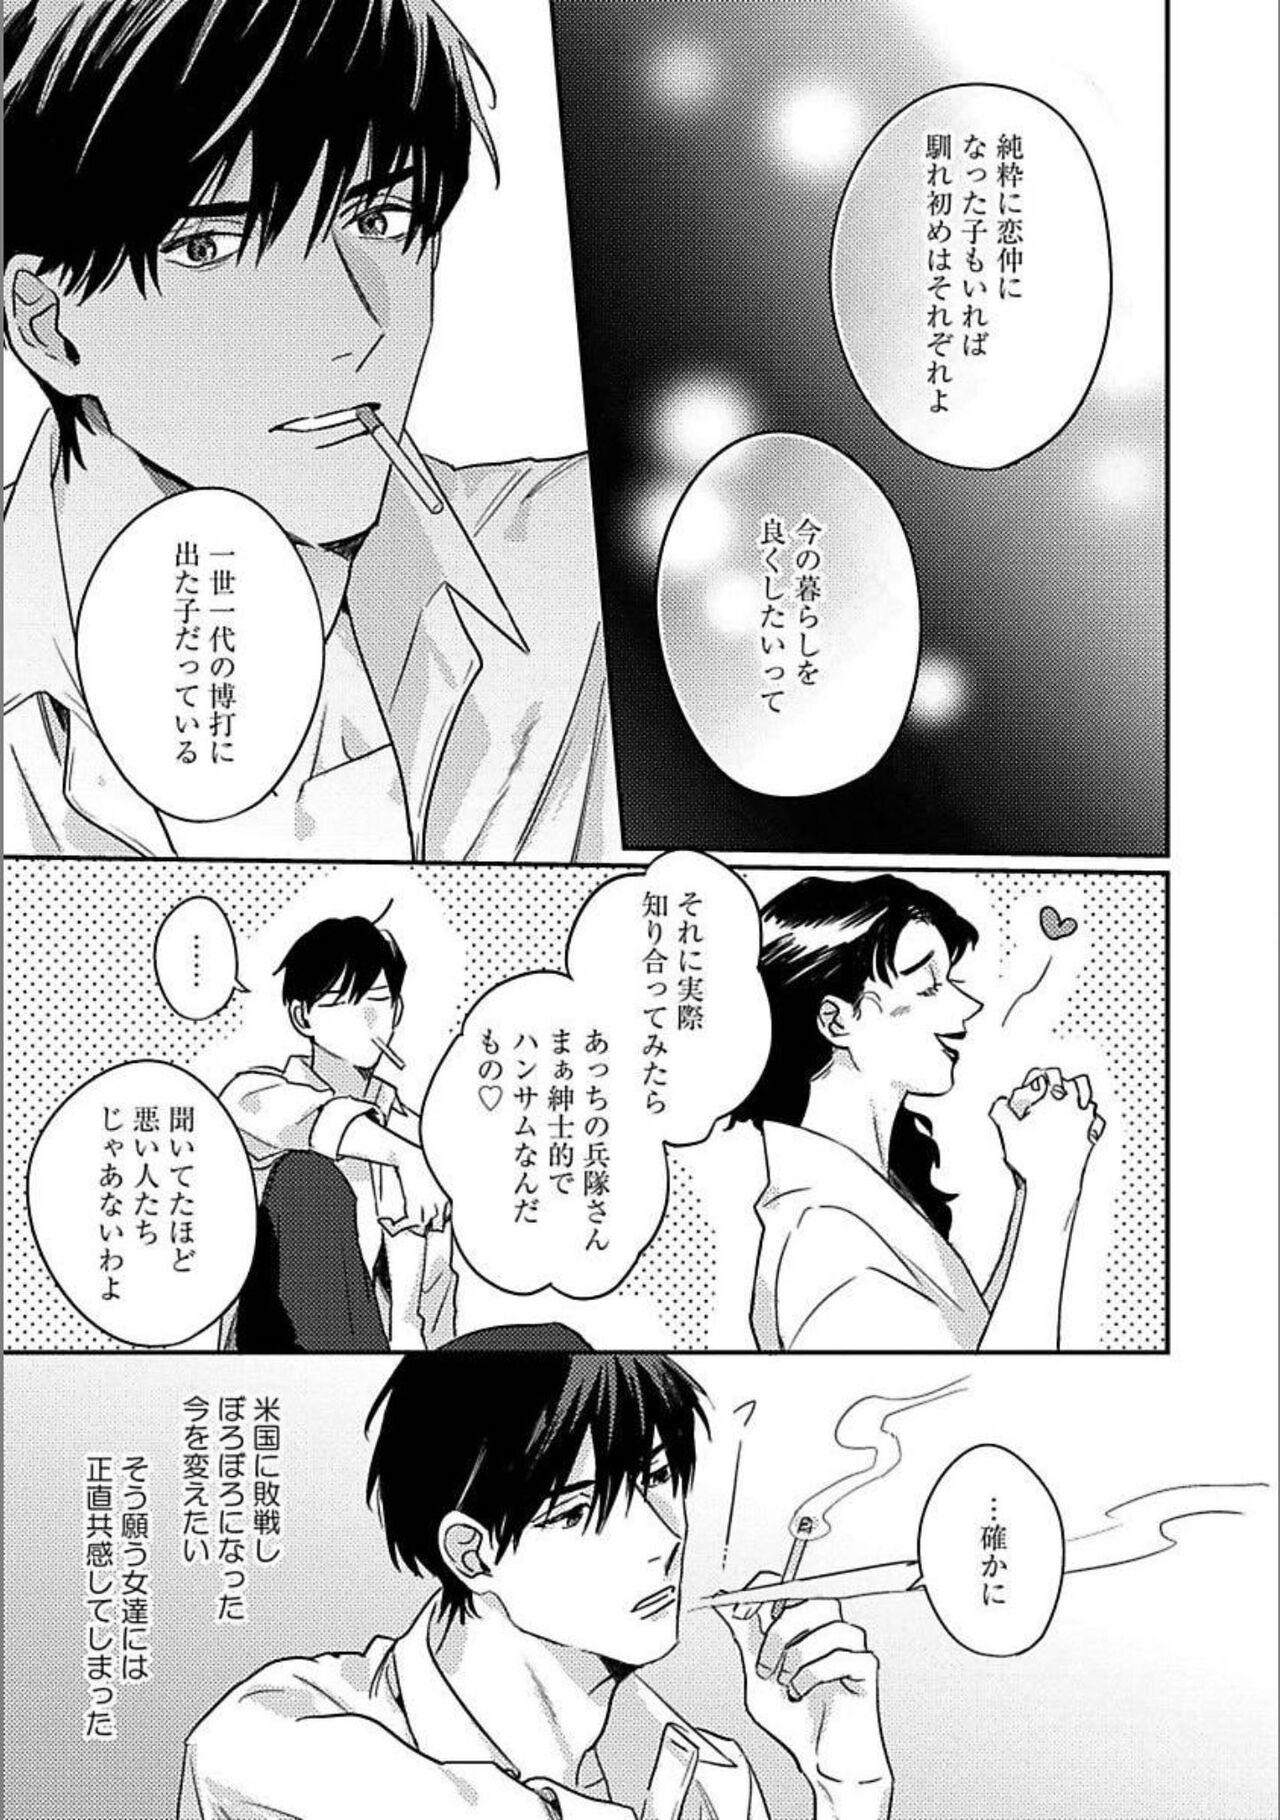 Best Blowjob Hitori de Yoru wa Koerarenai - I Can't Stand Another Night Alone Closeups - Page 8